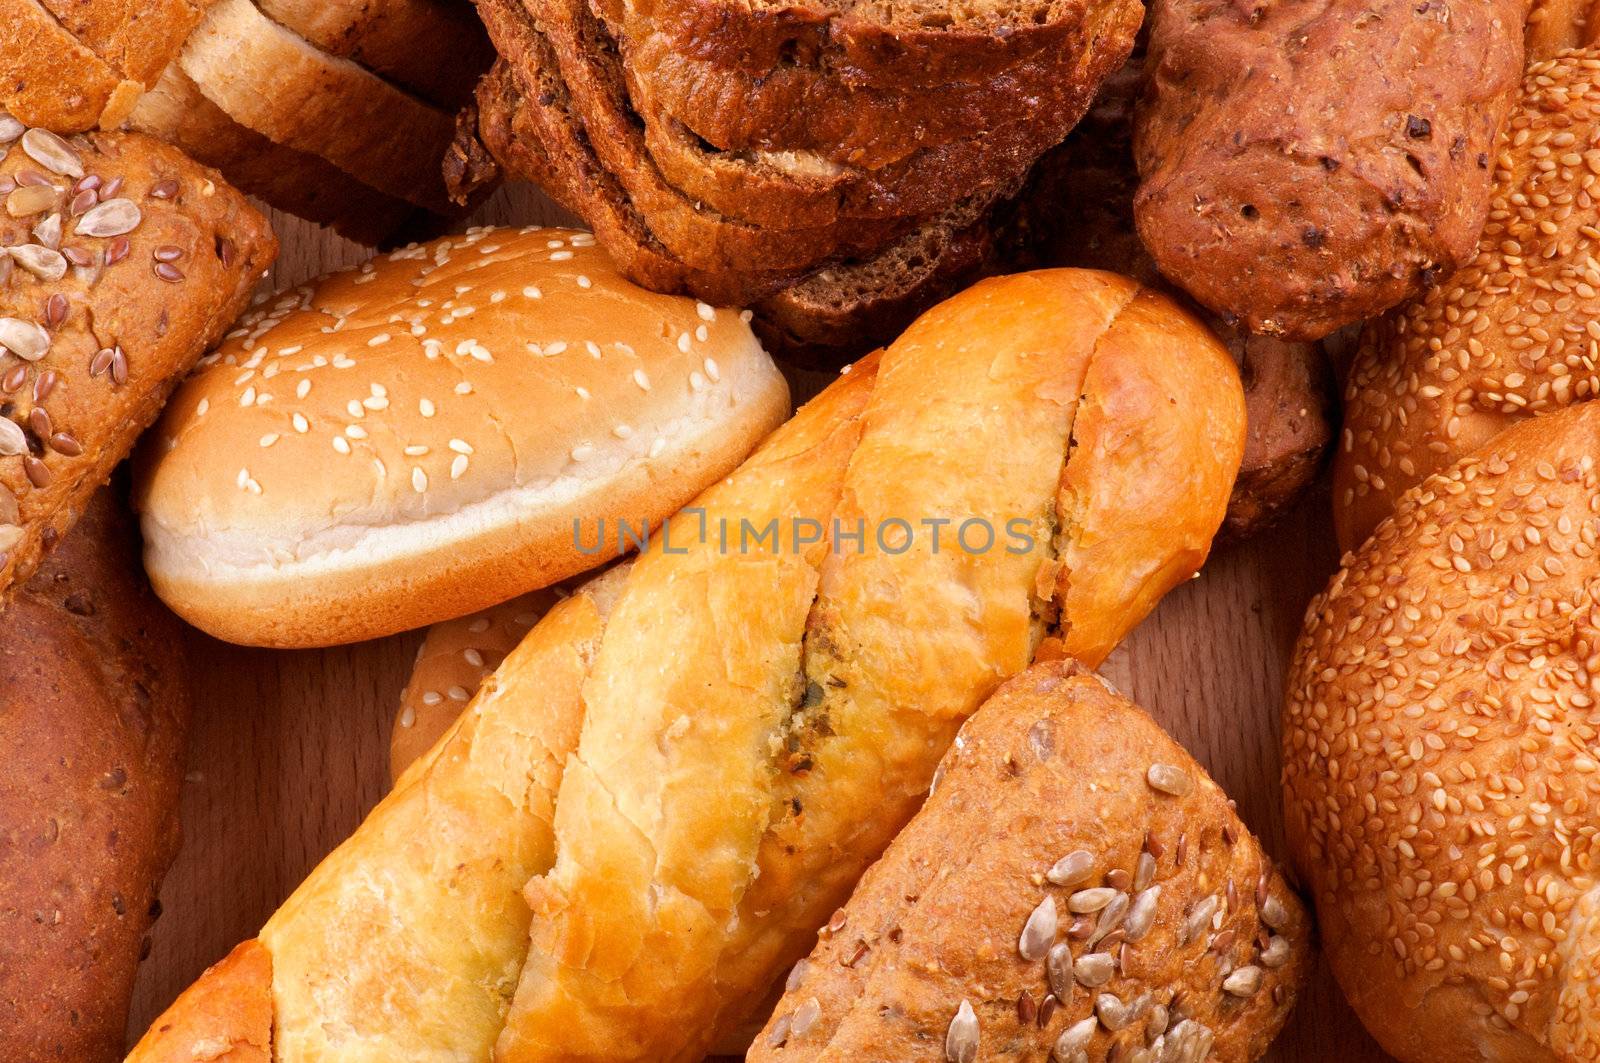 Arrangement of baked bread and rolls by zhekos